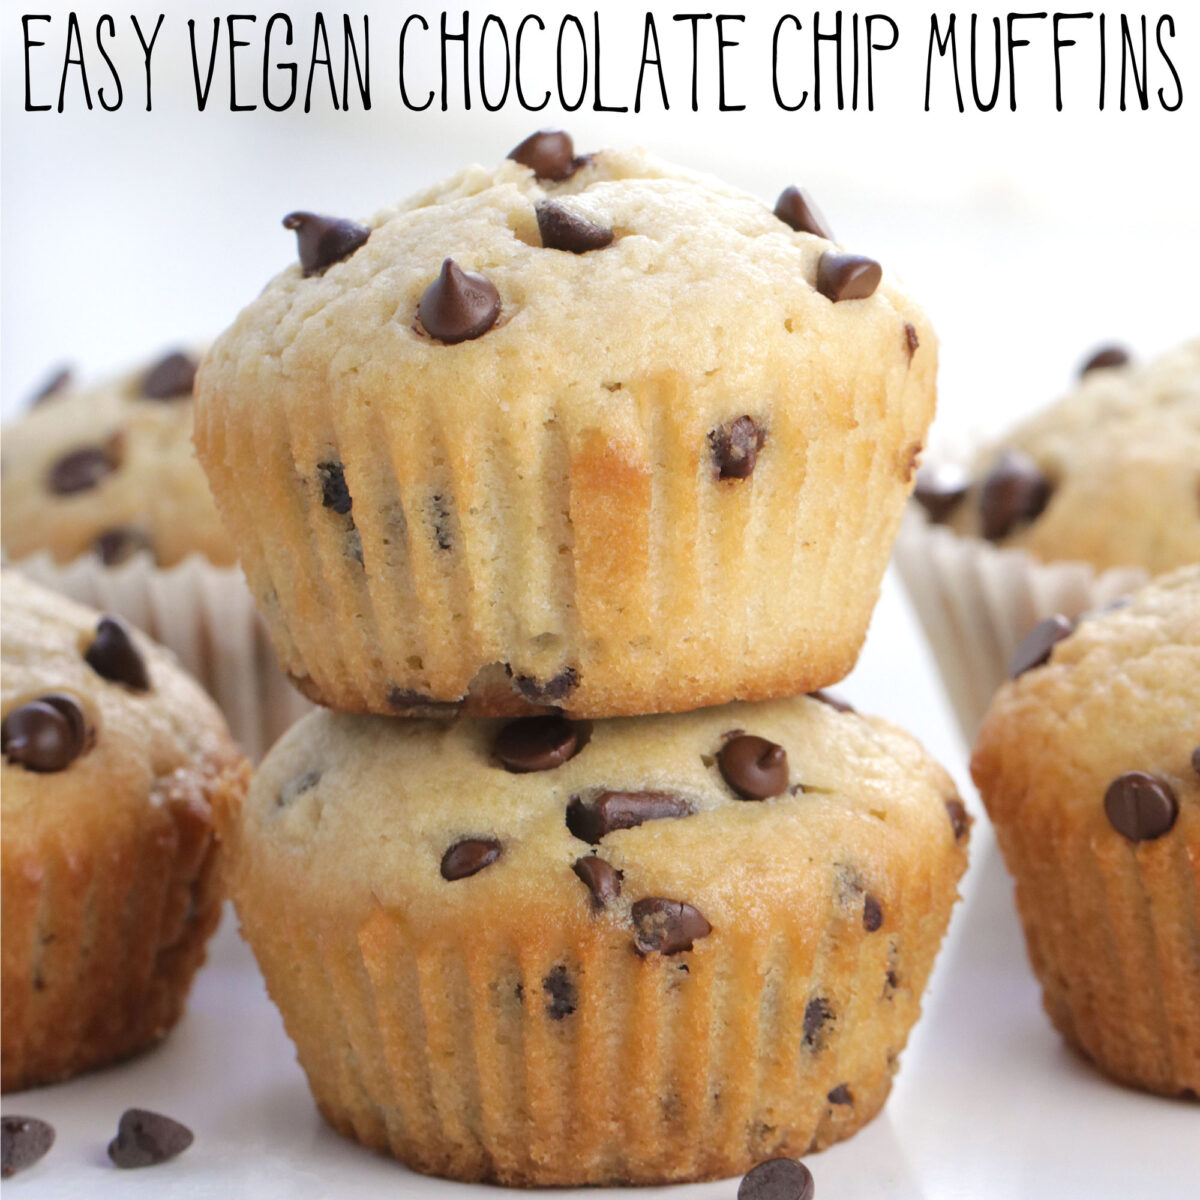 vegan chocolate chip muffins recipe